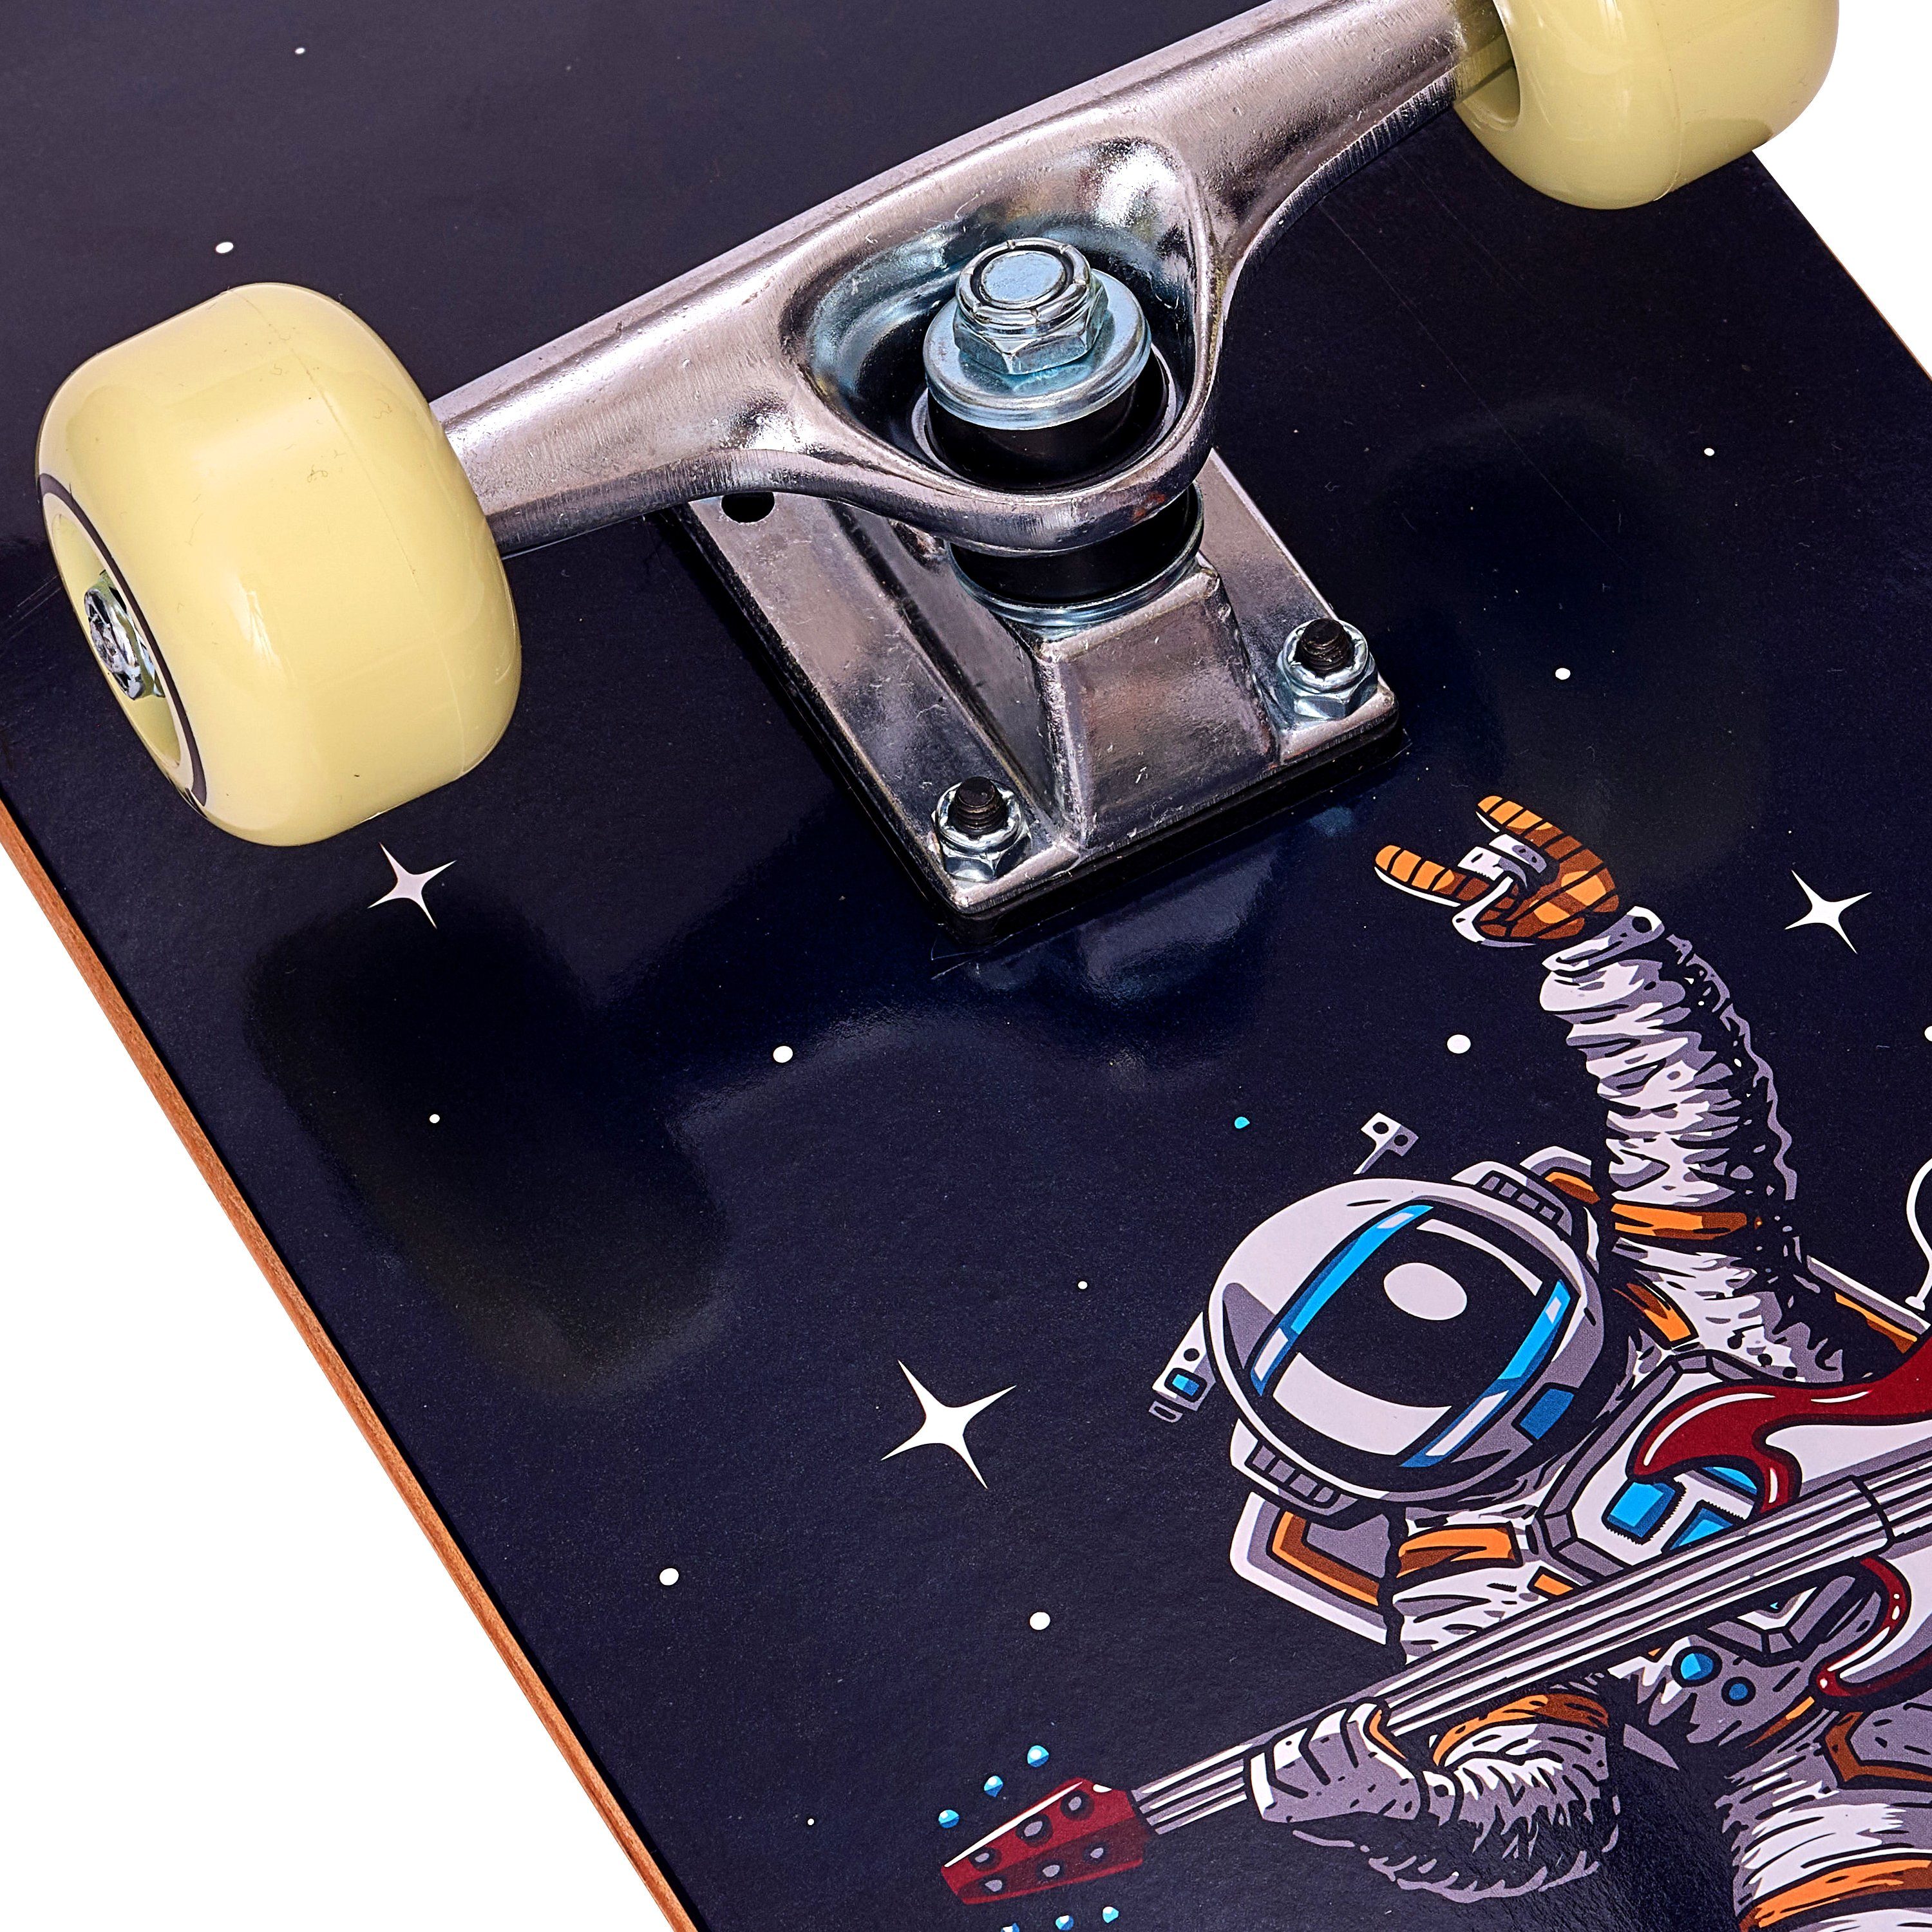 Apollo Skateboard Rock Kinderskateboard, 28" Space Teens und für Kinderskateboard Kinder, Kids